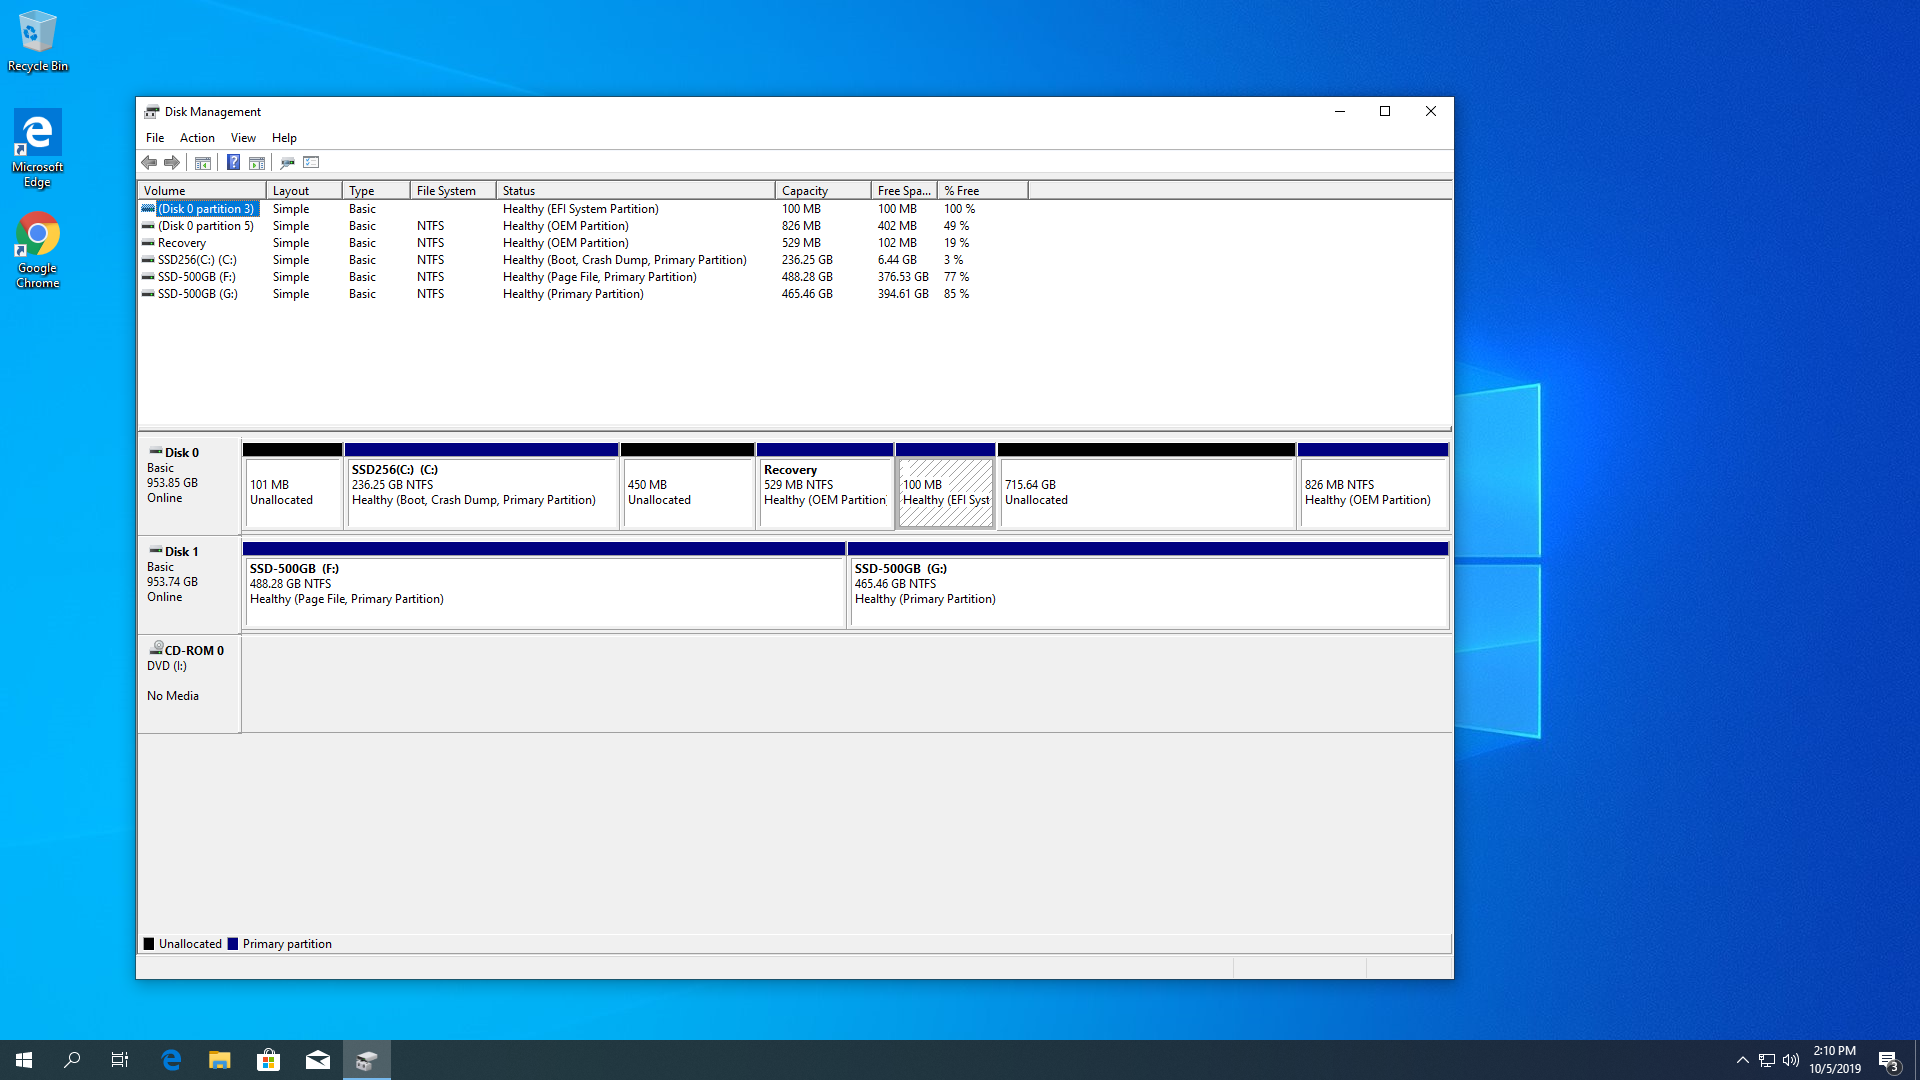 Clean Windows 10 Install & Disk Partitions 12e005f1-2cbb-418e-894e-522954647714?upload=true.png